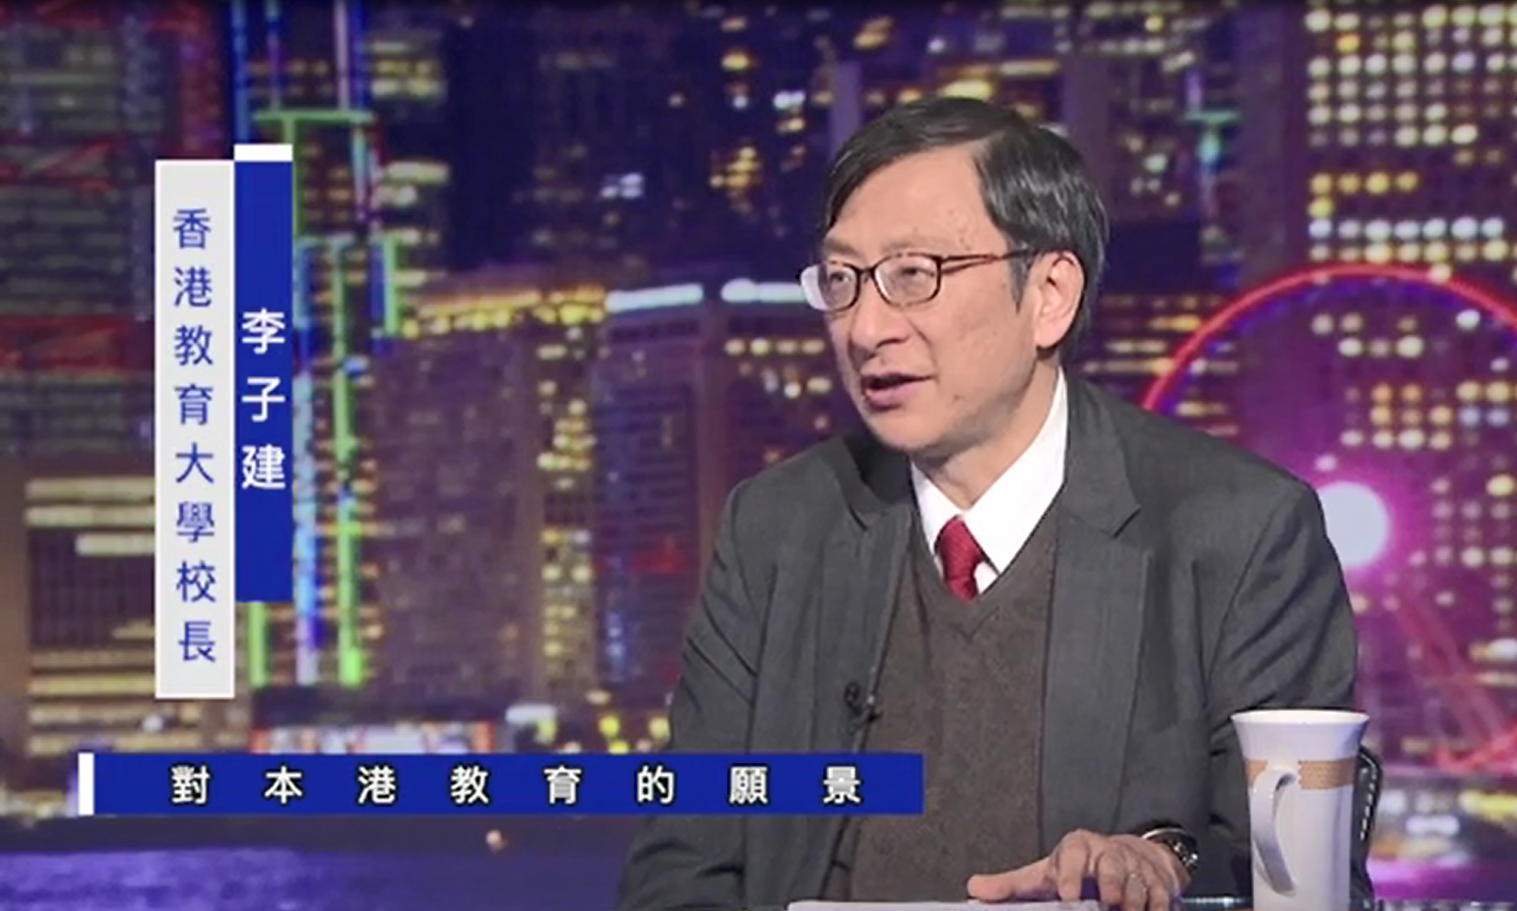 Prof. John Lee Chi-Kin, President of EdUHK elaborates his vision for education in Hong Kong